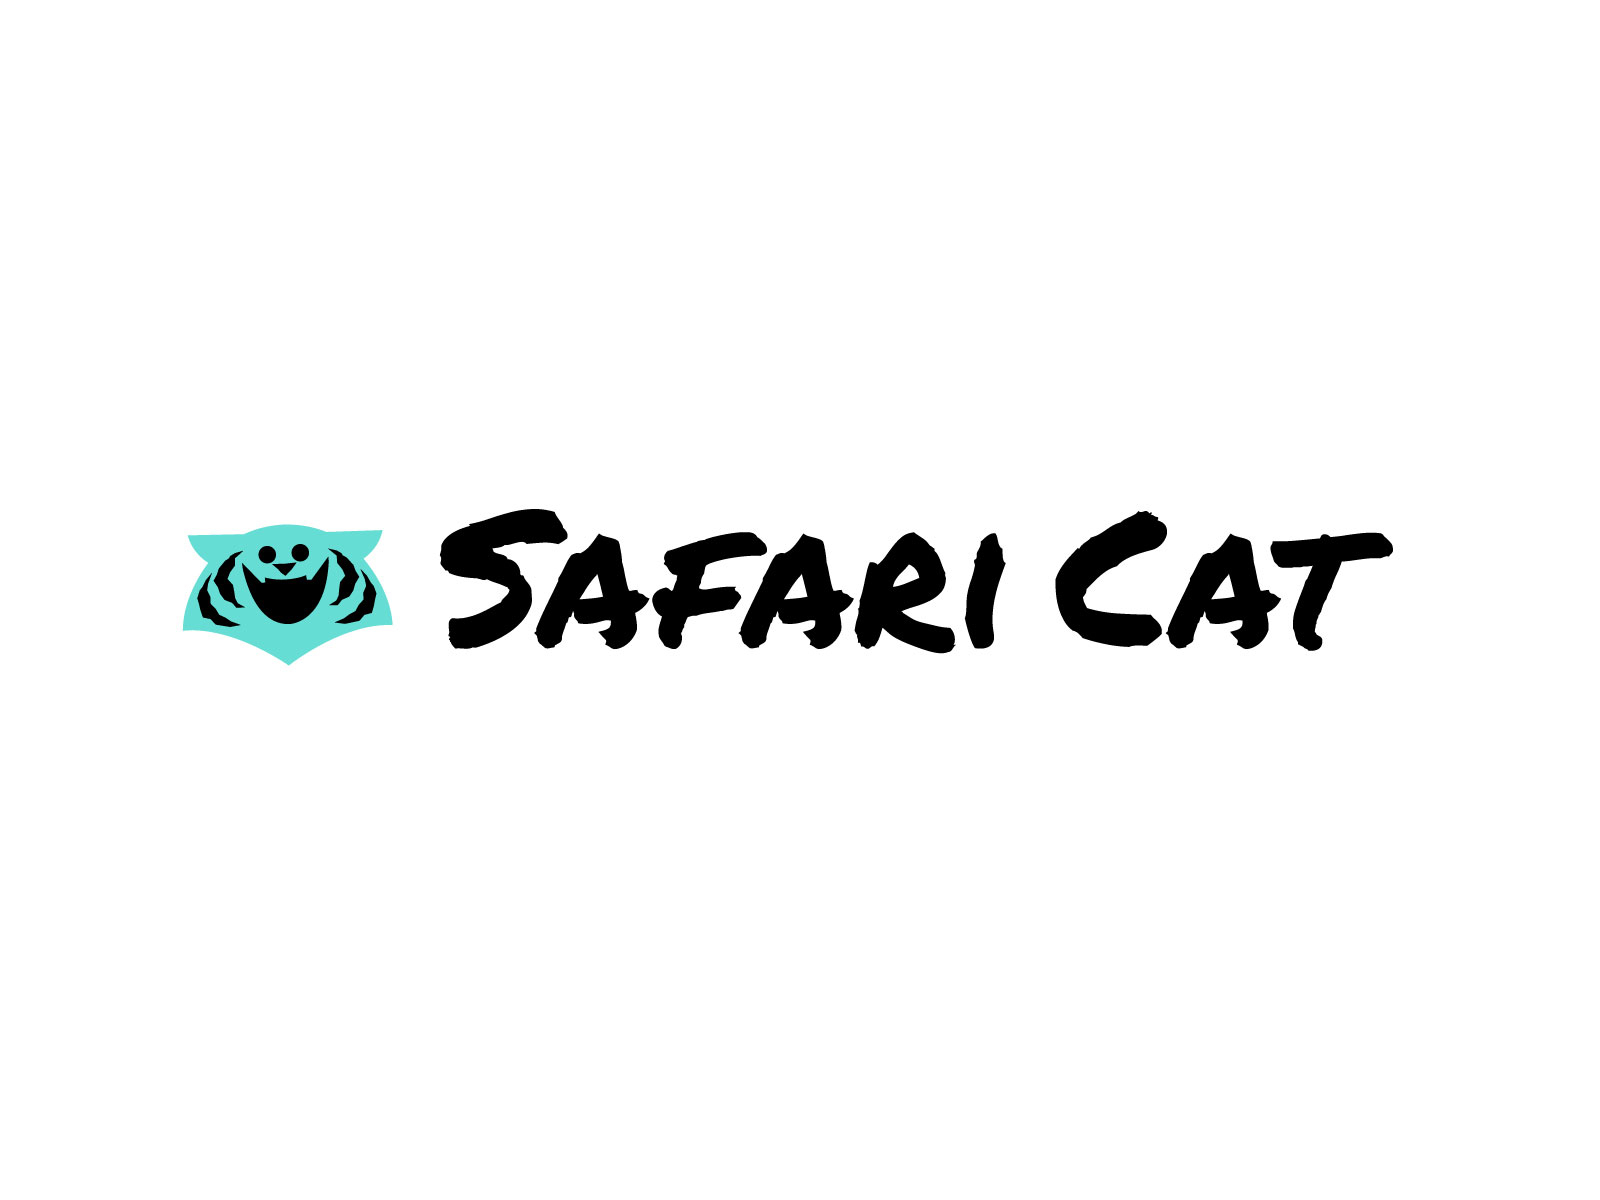 Safari Cat by Brandon Joseph on Dribbble